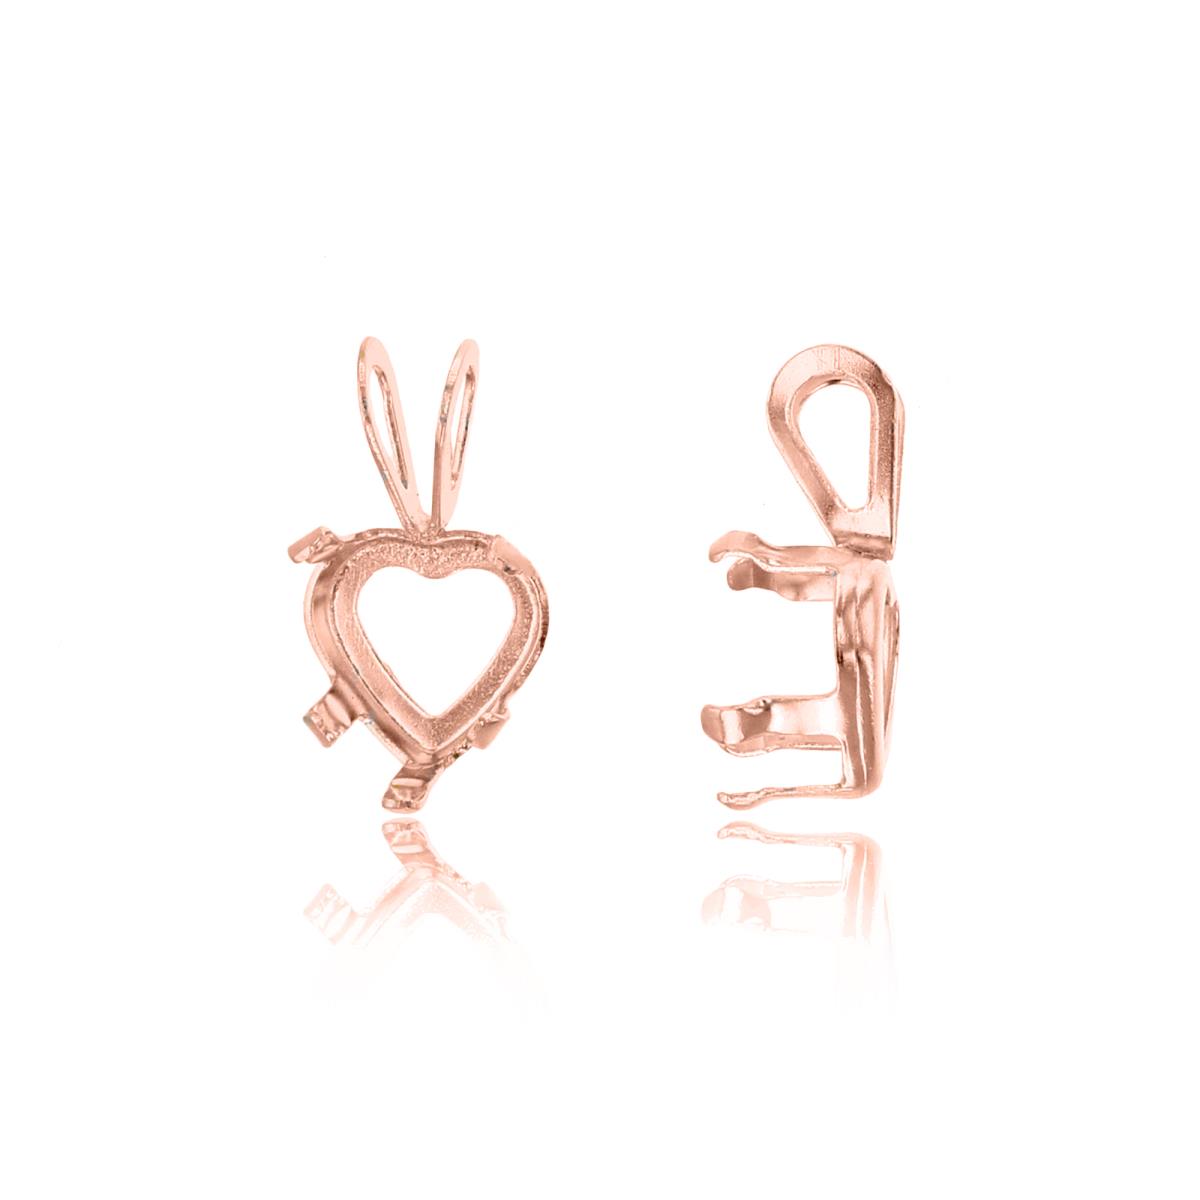 10K Rose Gold 6x6mm Heart Prong Rabbit Ear Pendant Finding